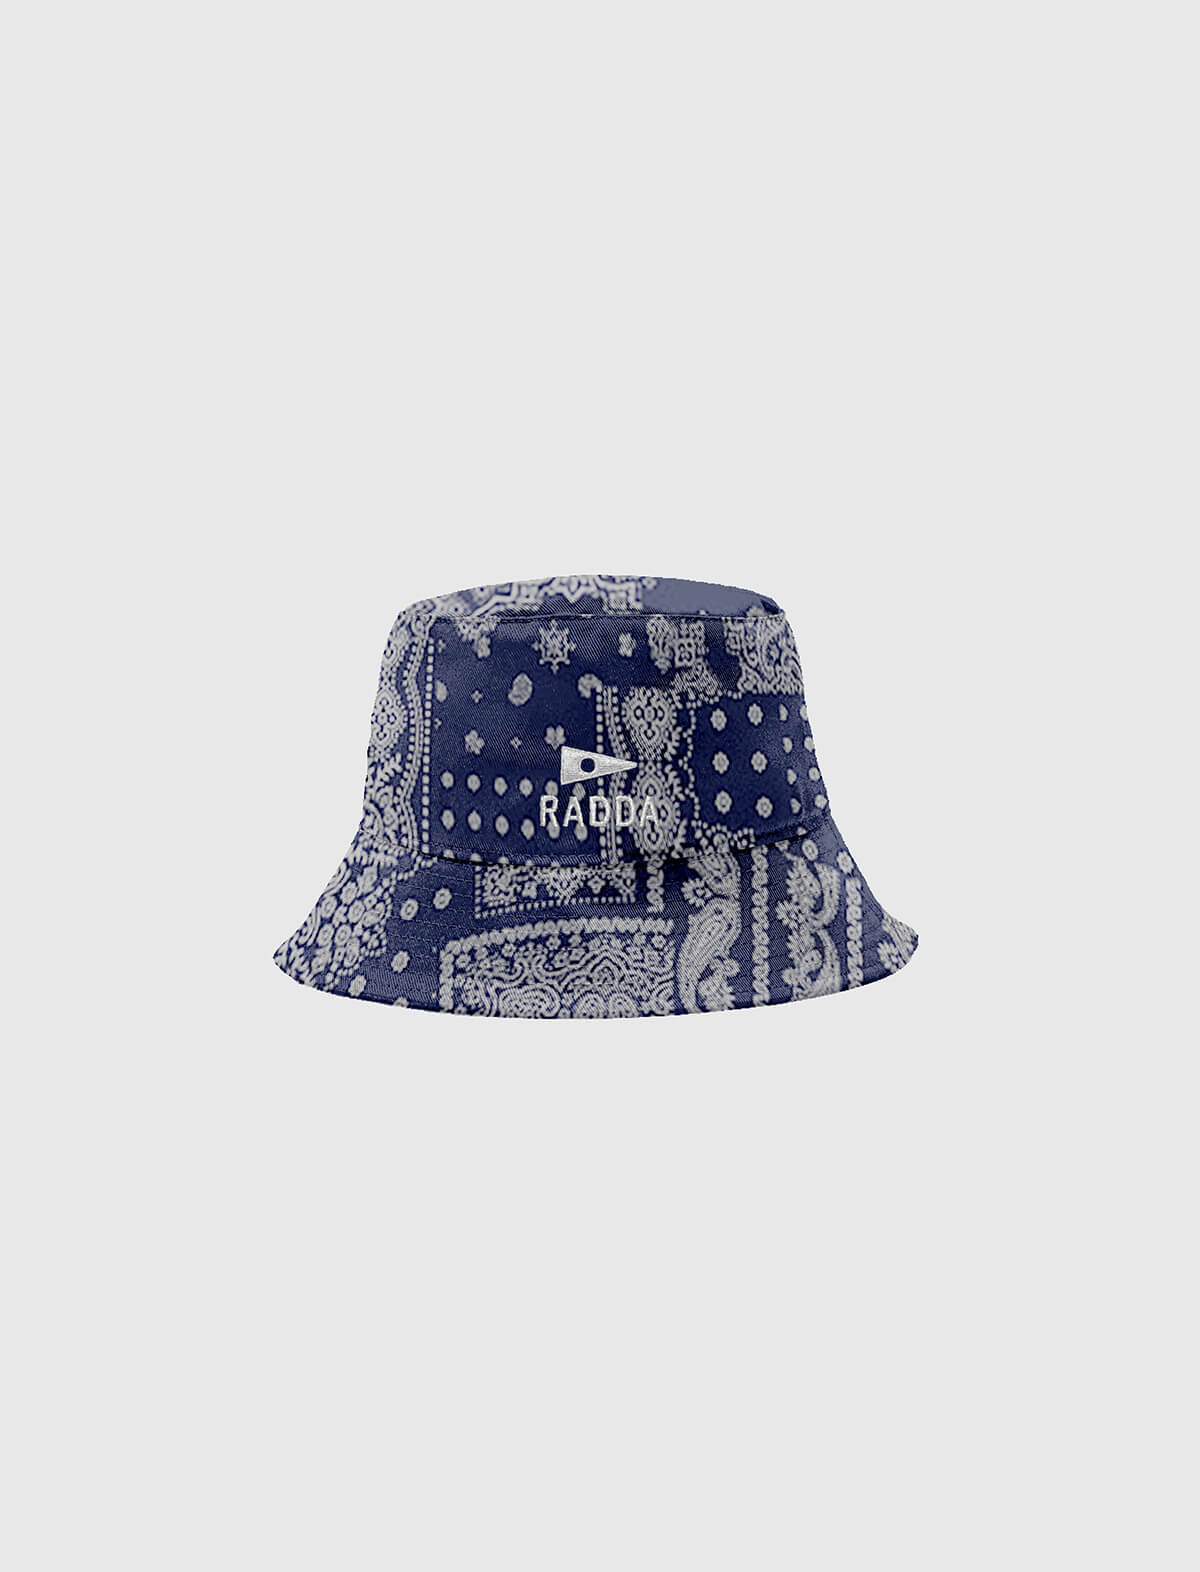 RADDA GOLF Macross Bucket Hat in Indigo